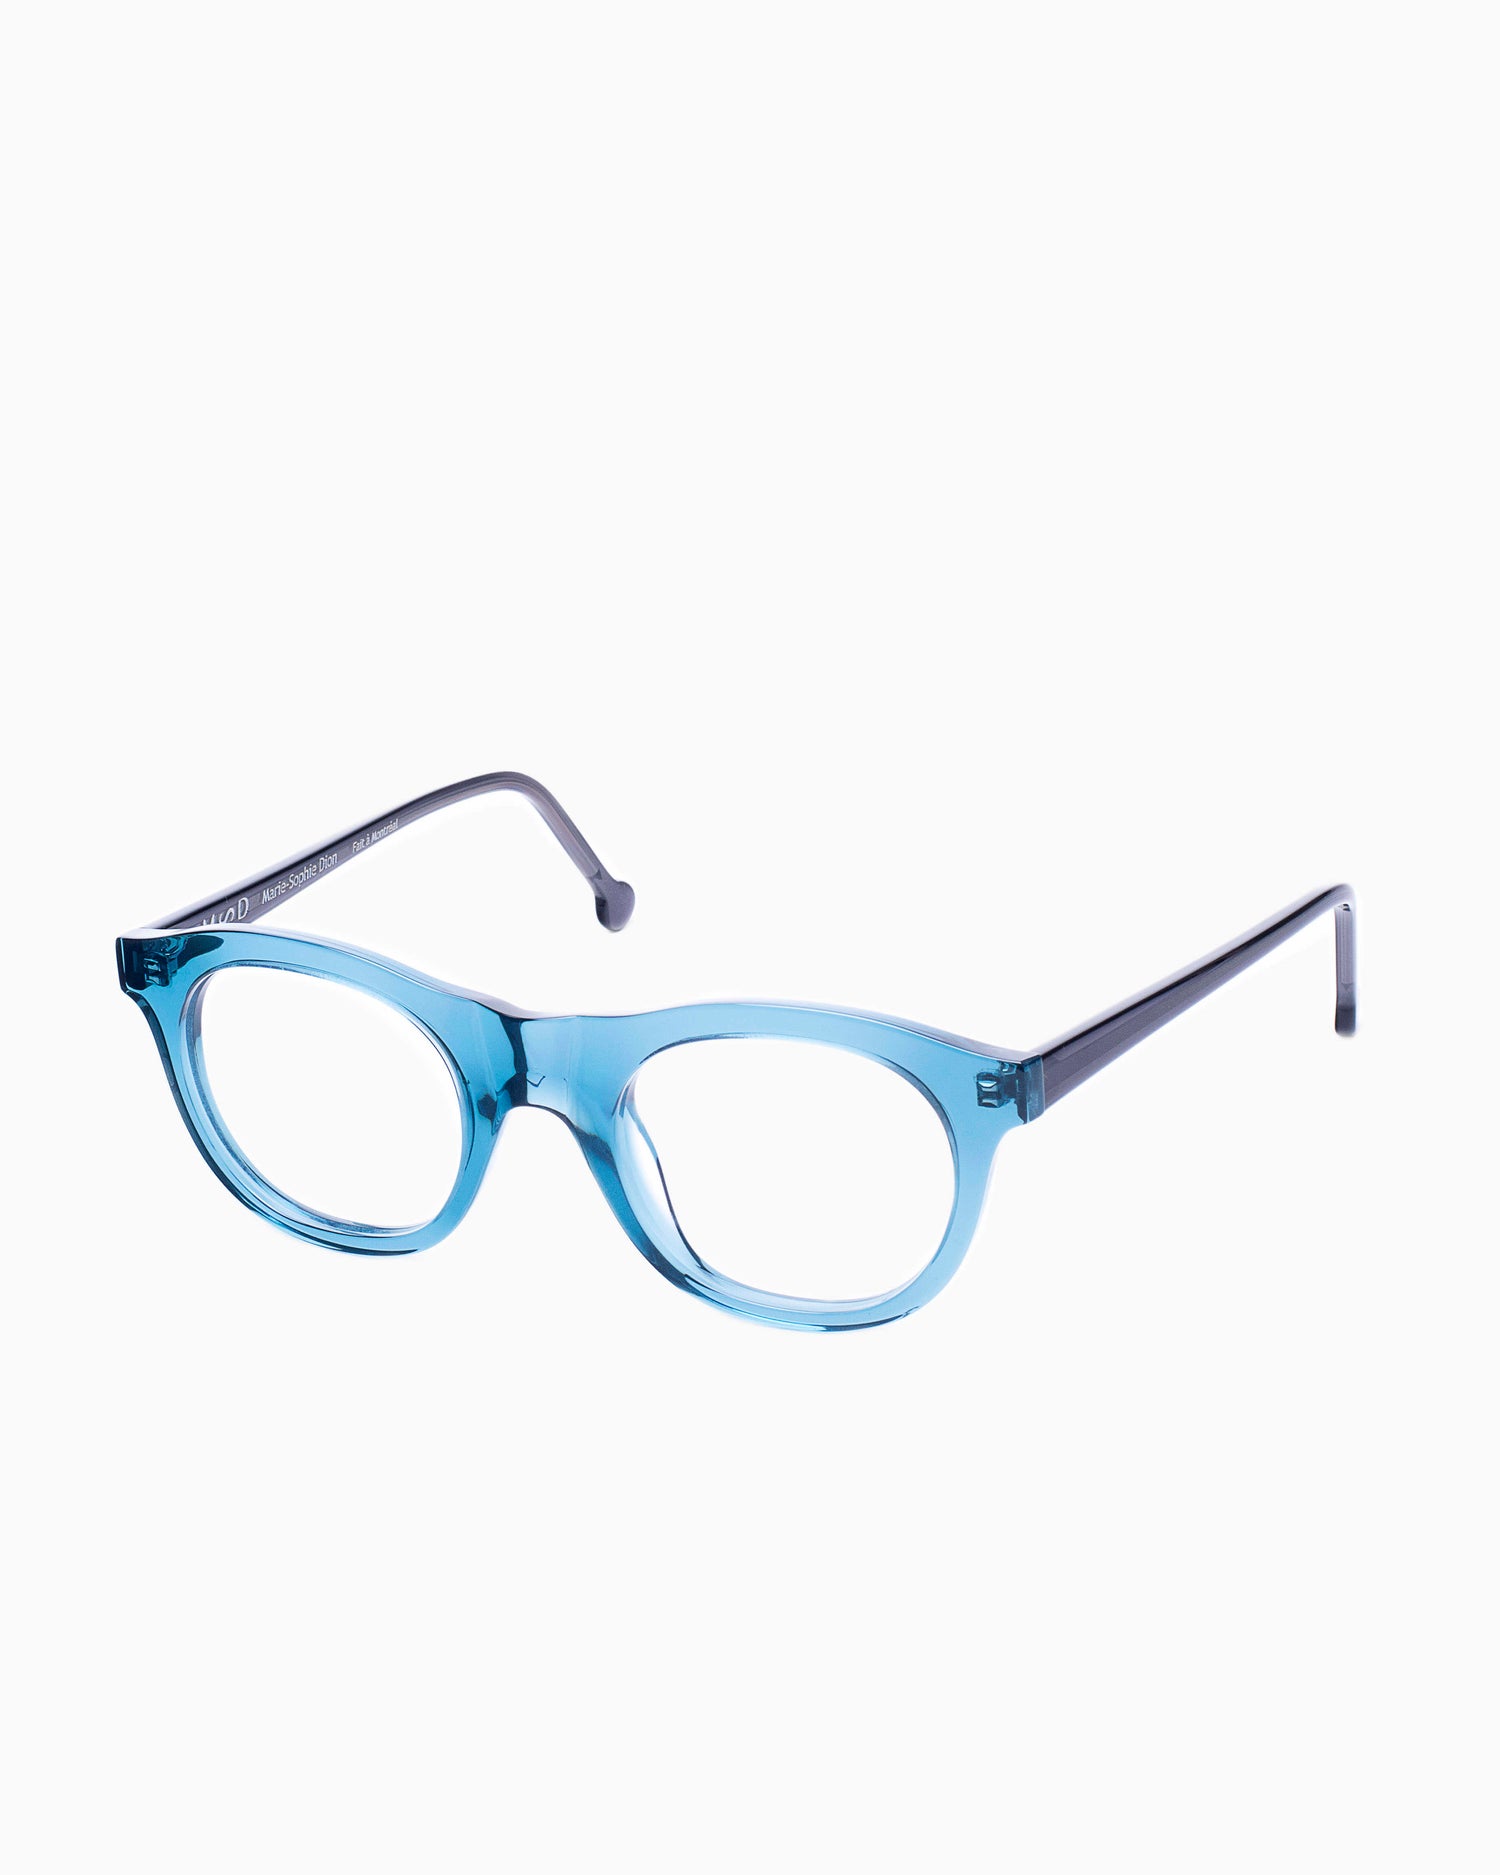 Marie-Sophie Dion - LEcuyer - Blu | glasses bar:  Marie-Sophie Dion